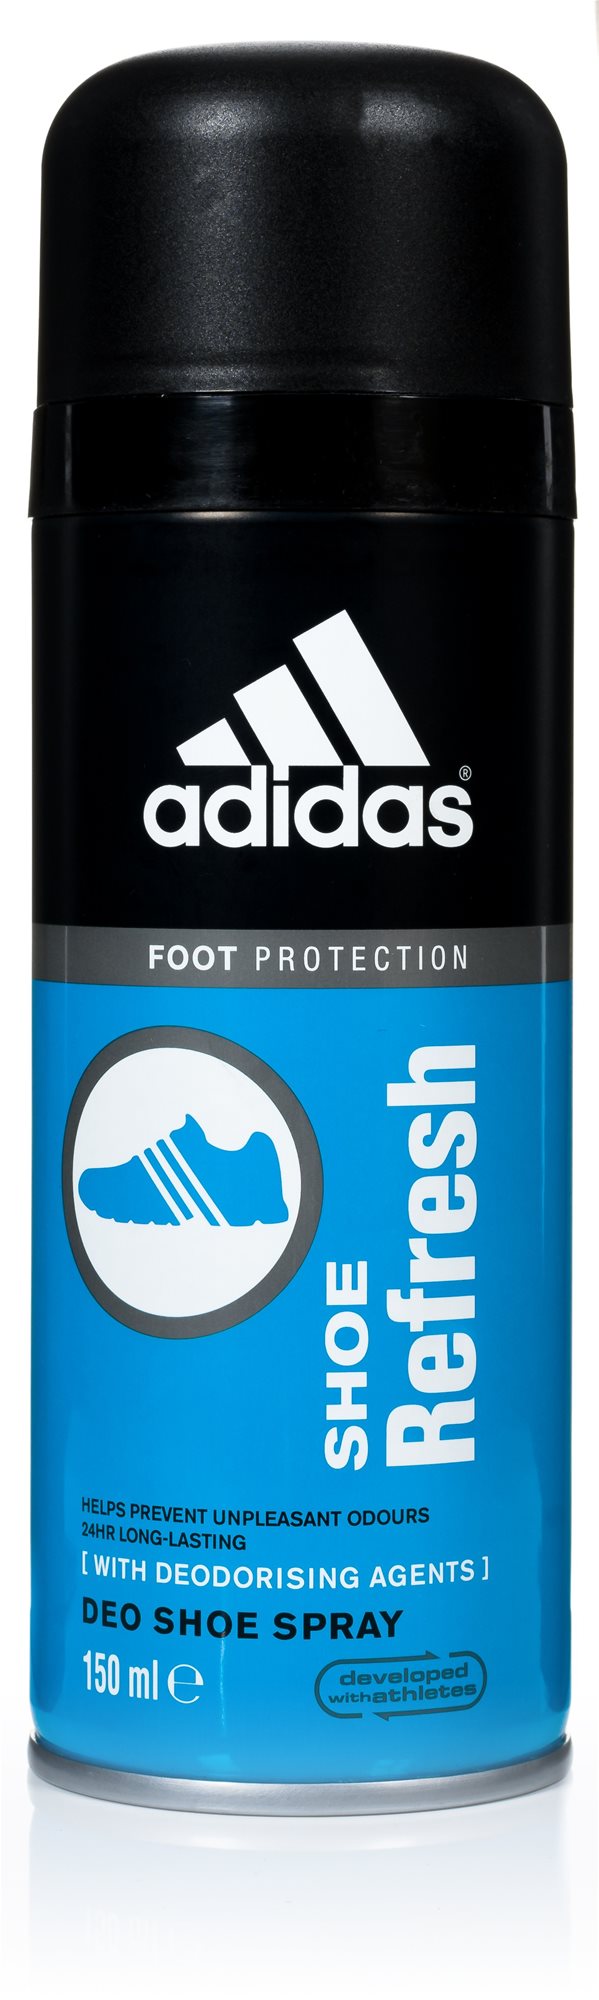 ADIDAS Foot Protection Foot Protect 150 ml